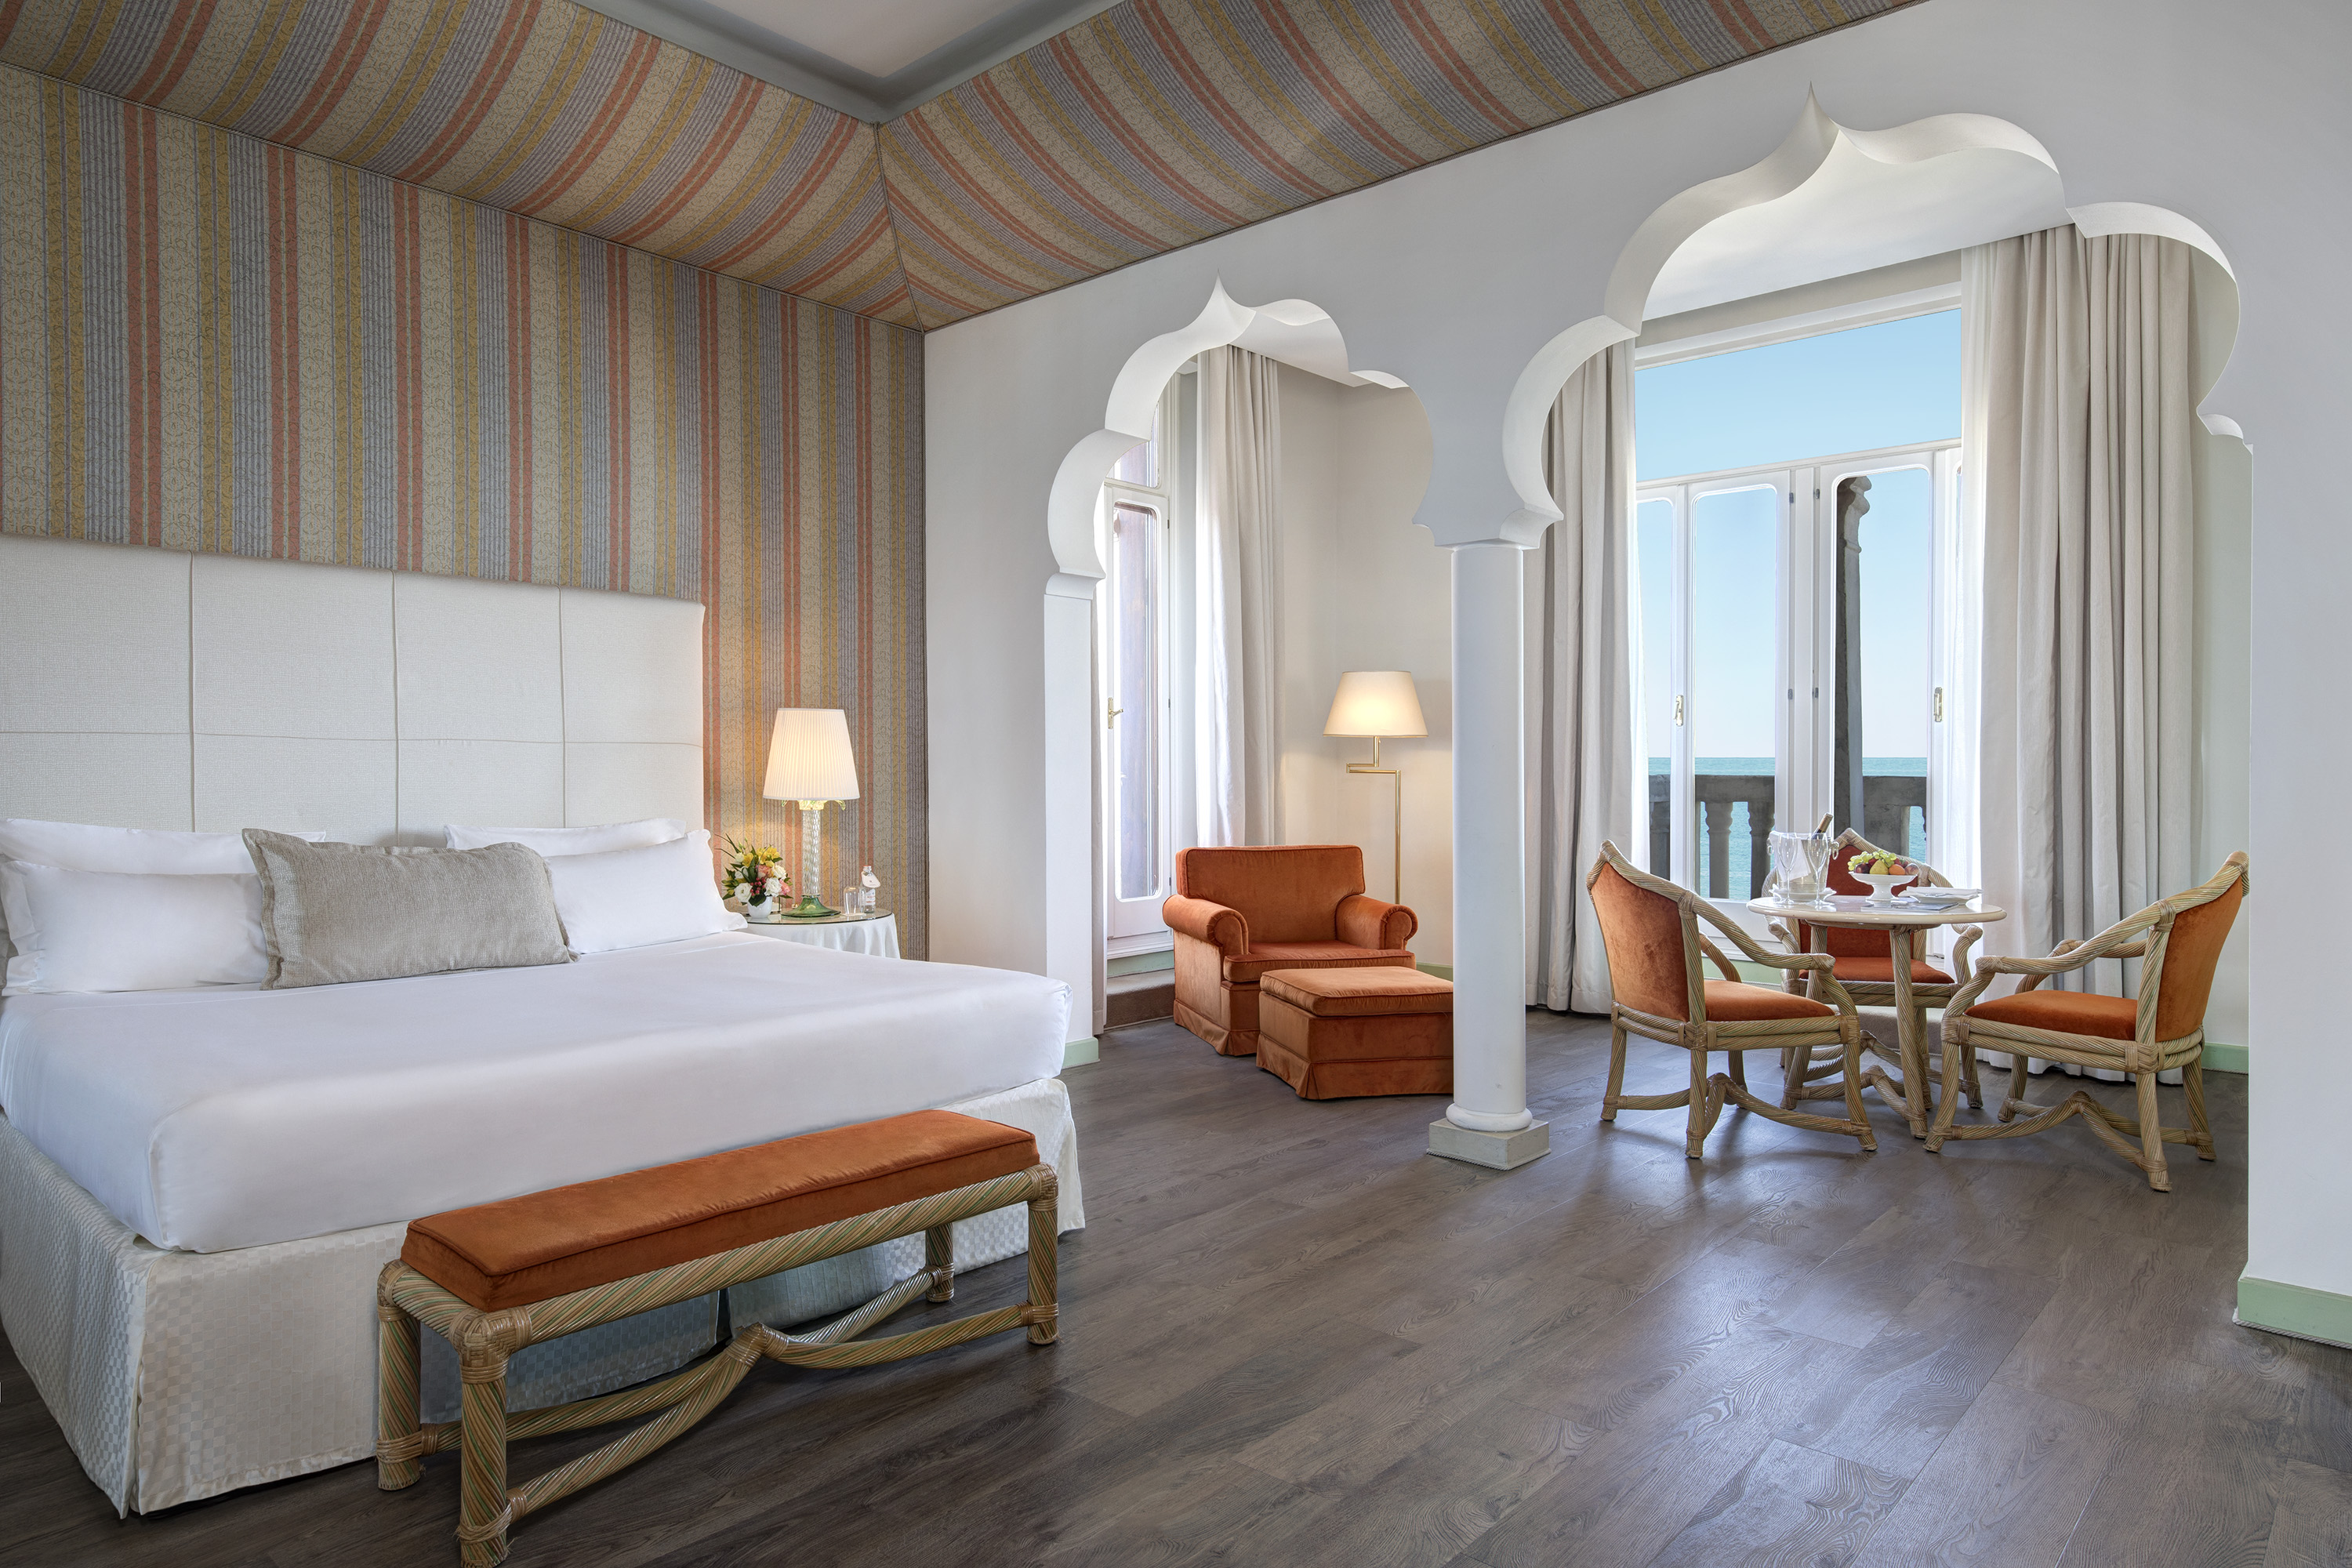 Hotel Excelsior Venice Lido Resort, Junior Suite - Luxury Hospitality PR uschi liebl pr